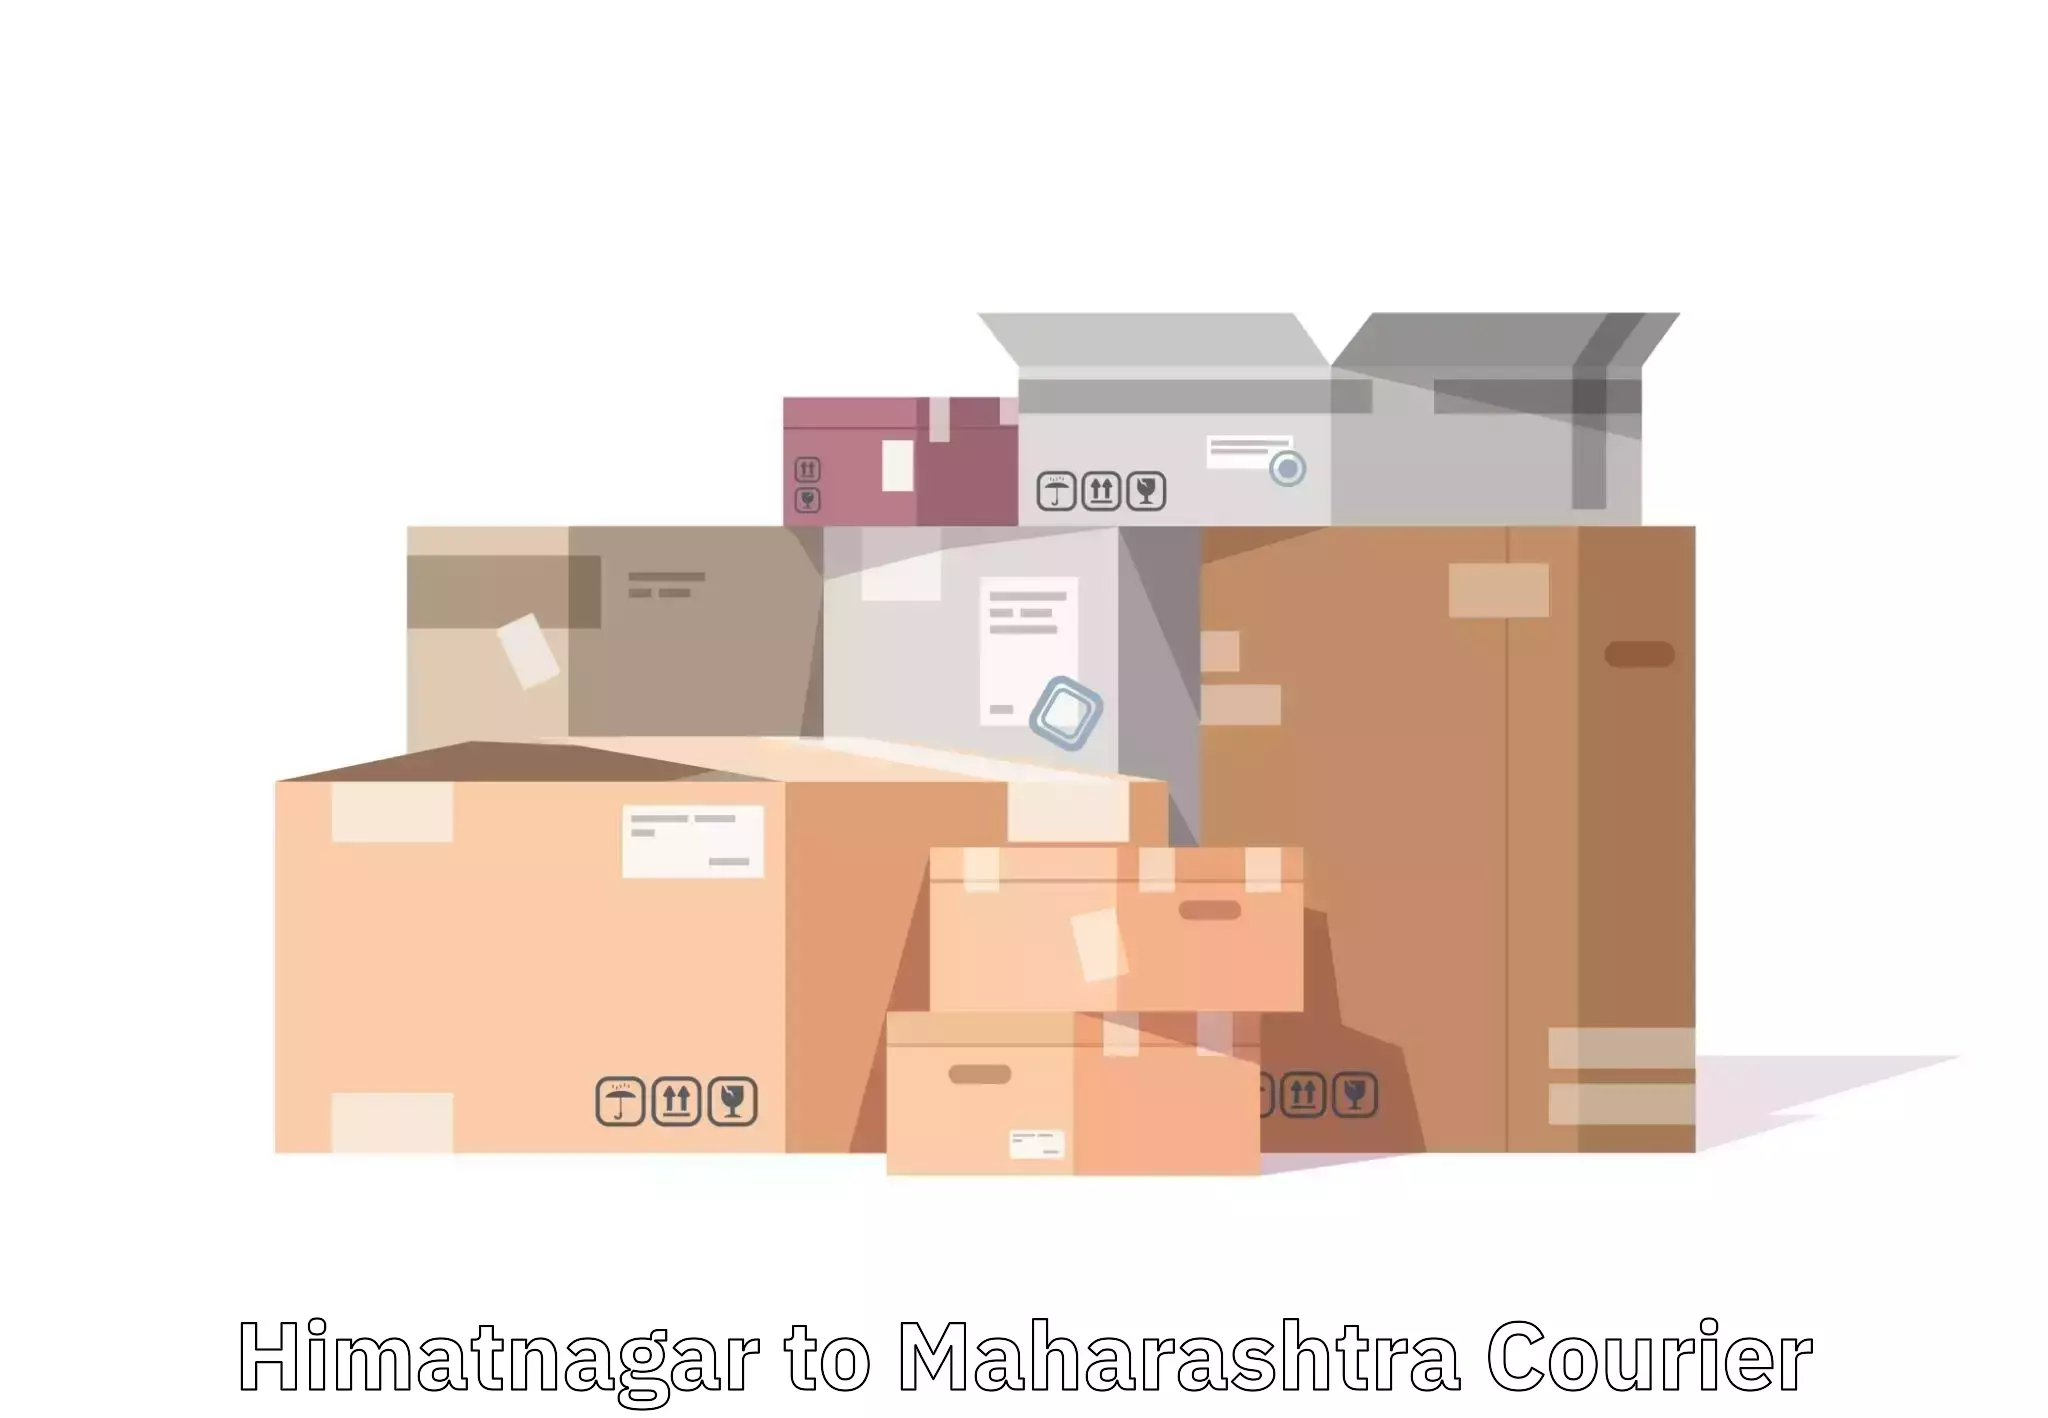 Luggage delivery app Himatnagar to Indapur